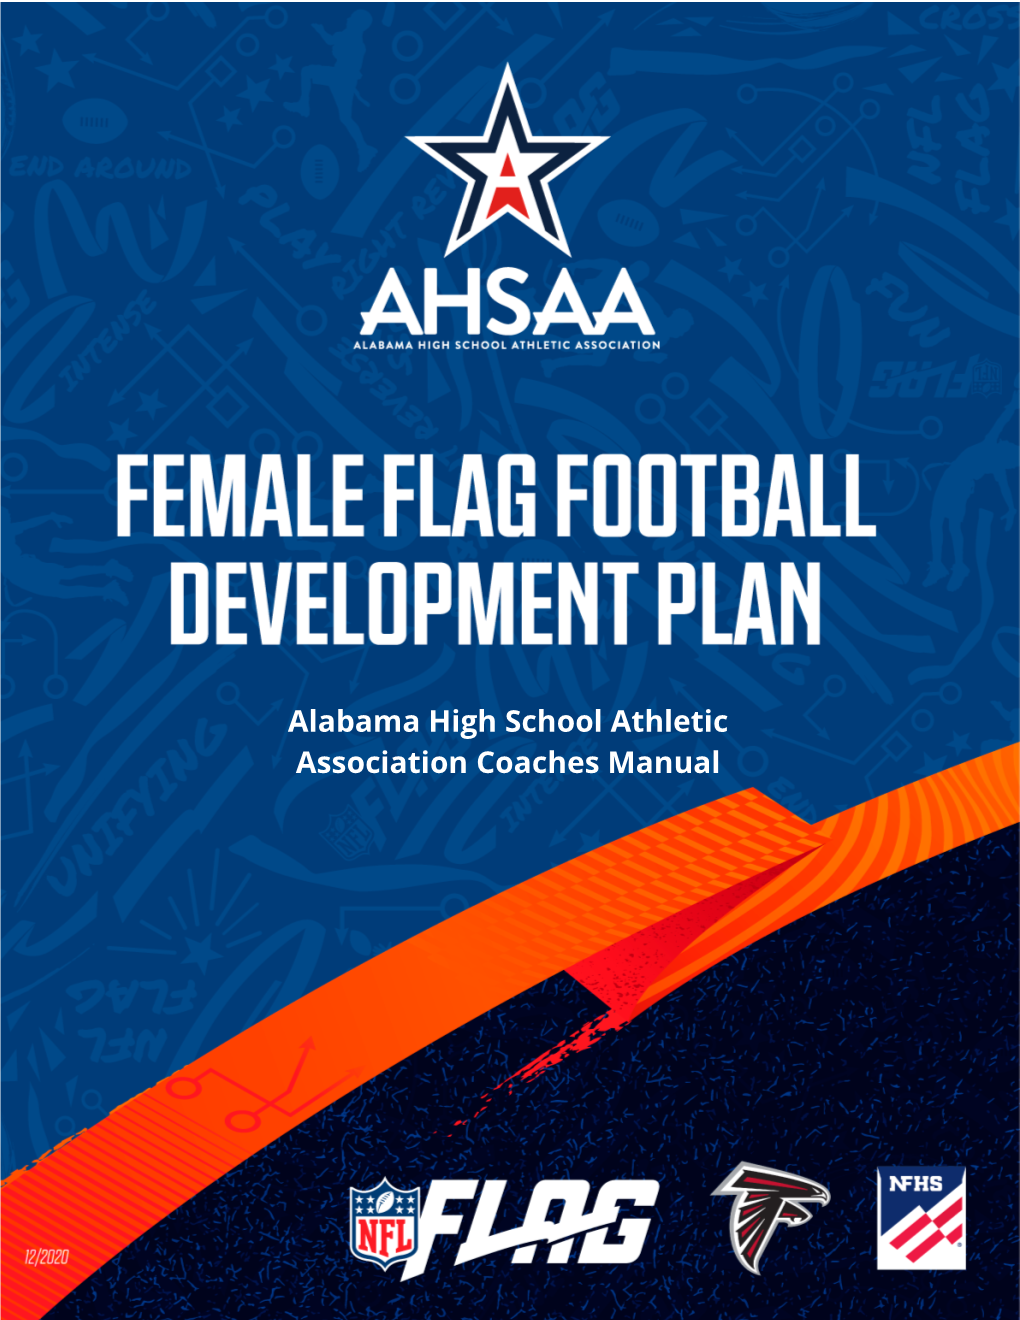 Alabama High School Athletic Association Coaches Manual